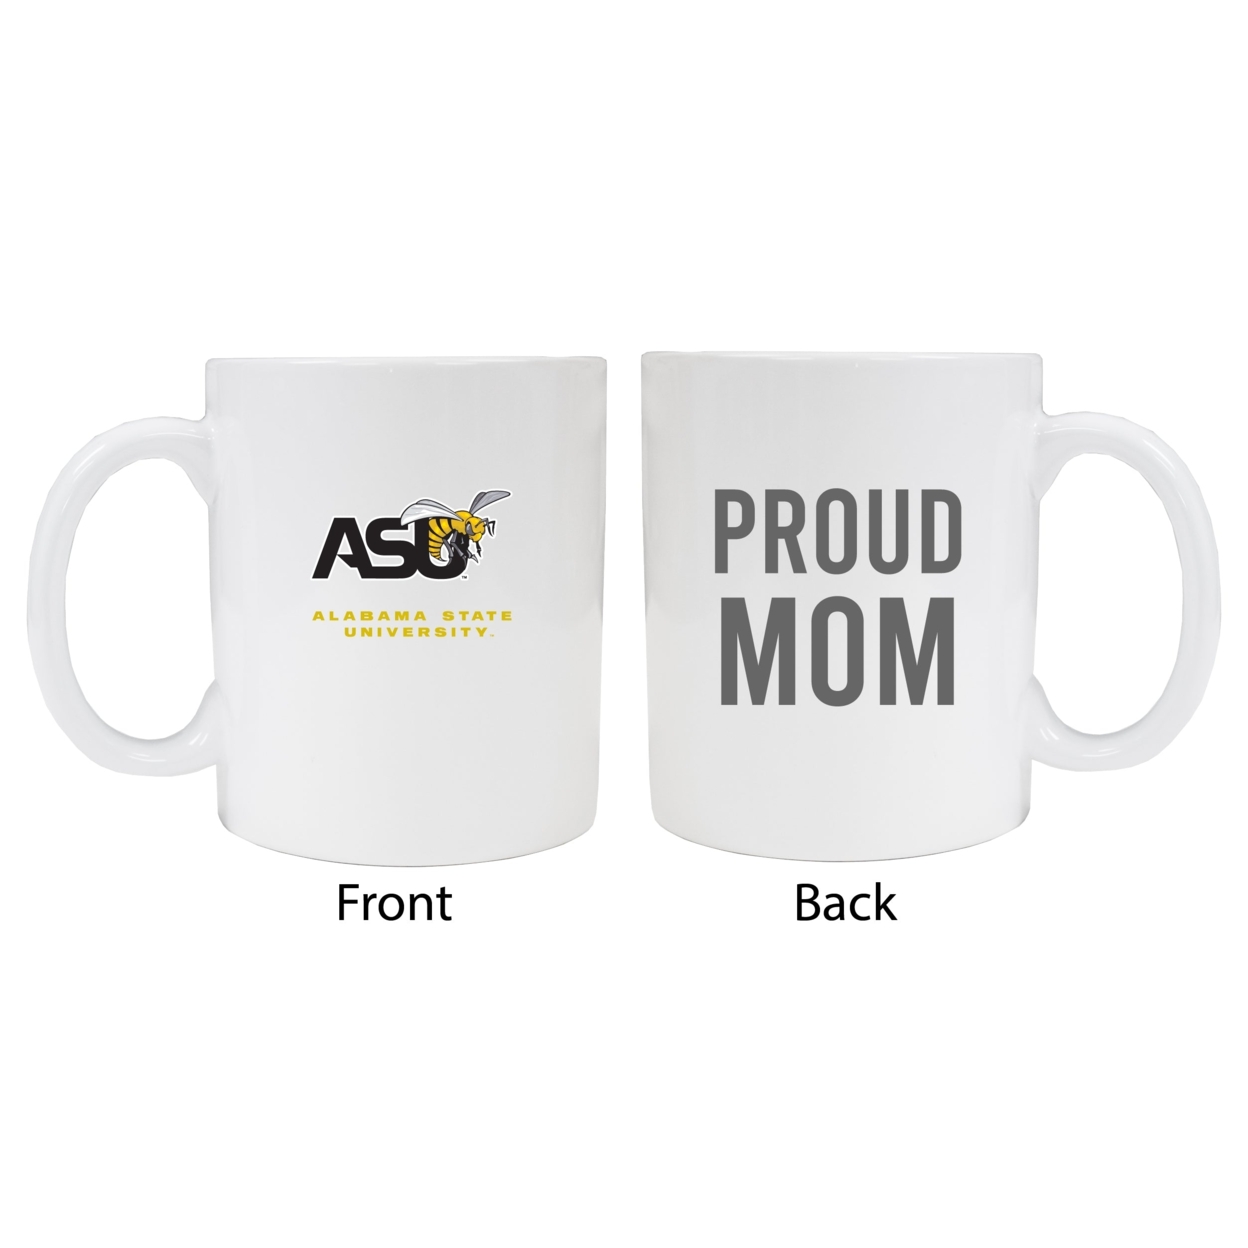 Alabama State University Proud Mom Ceramic Coffee Mug - White (2 Pack)